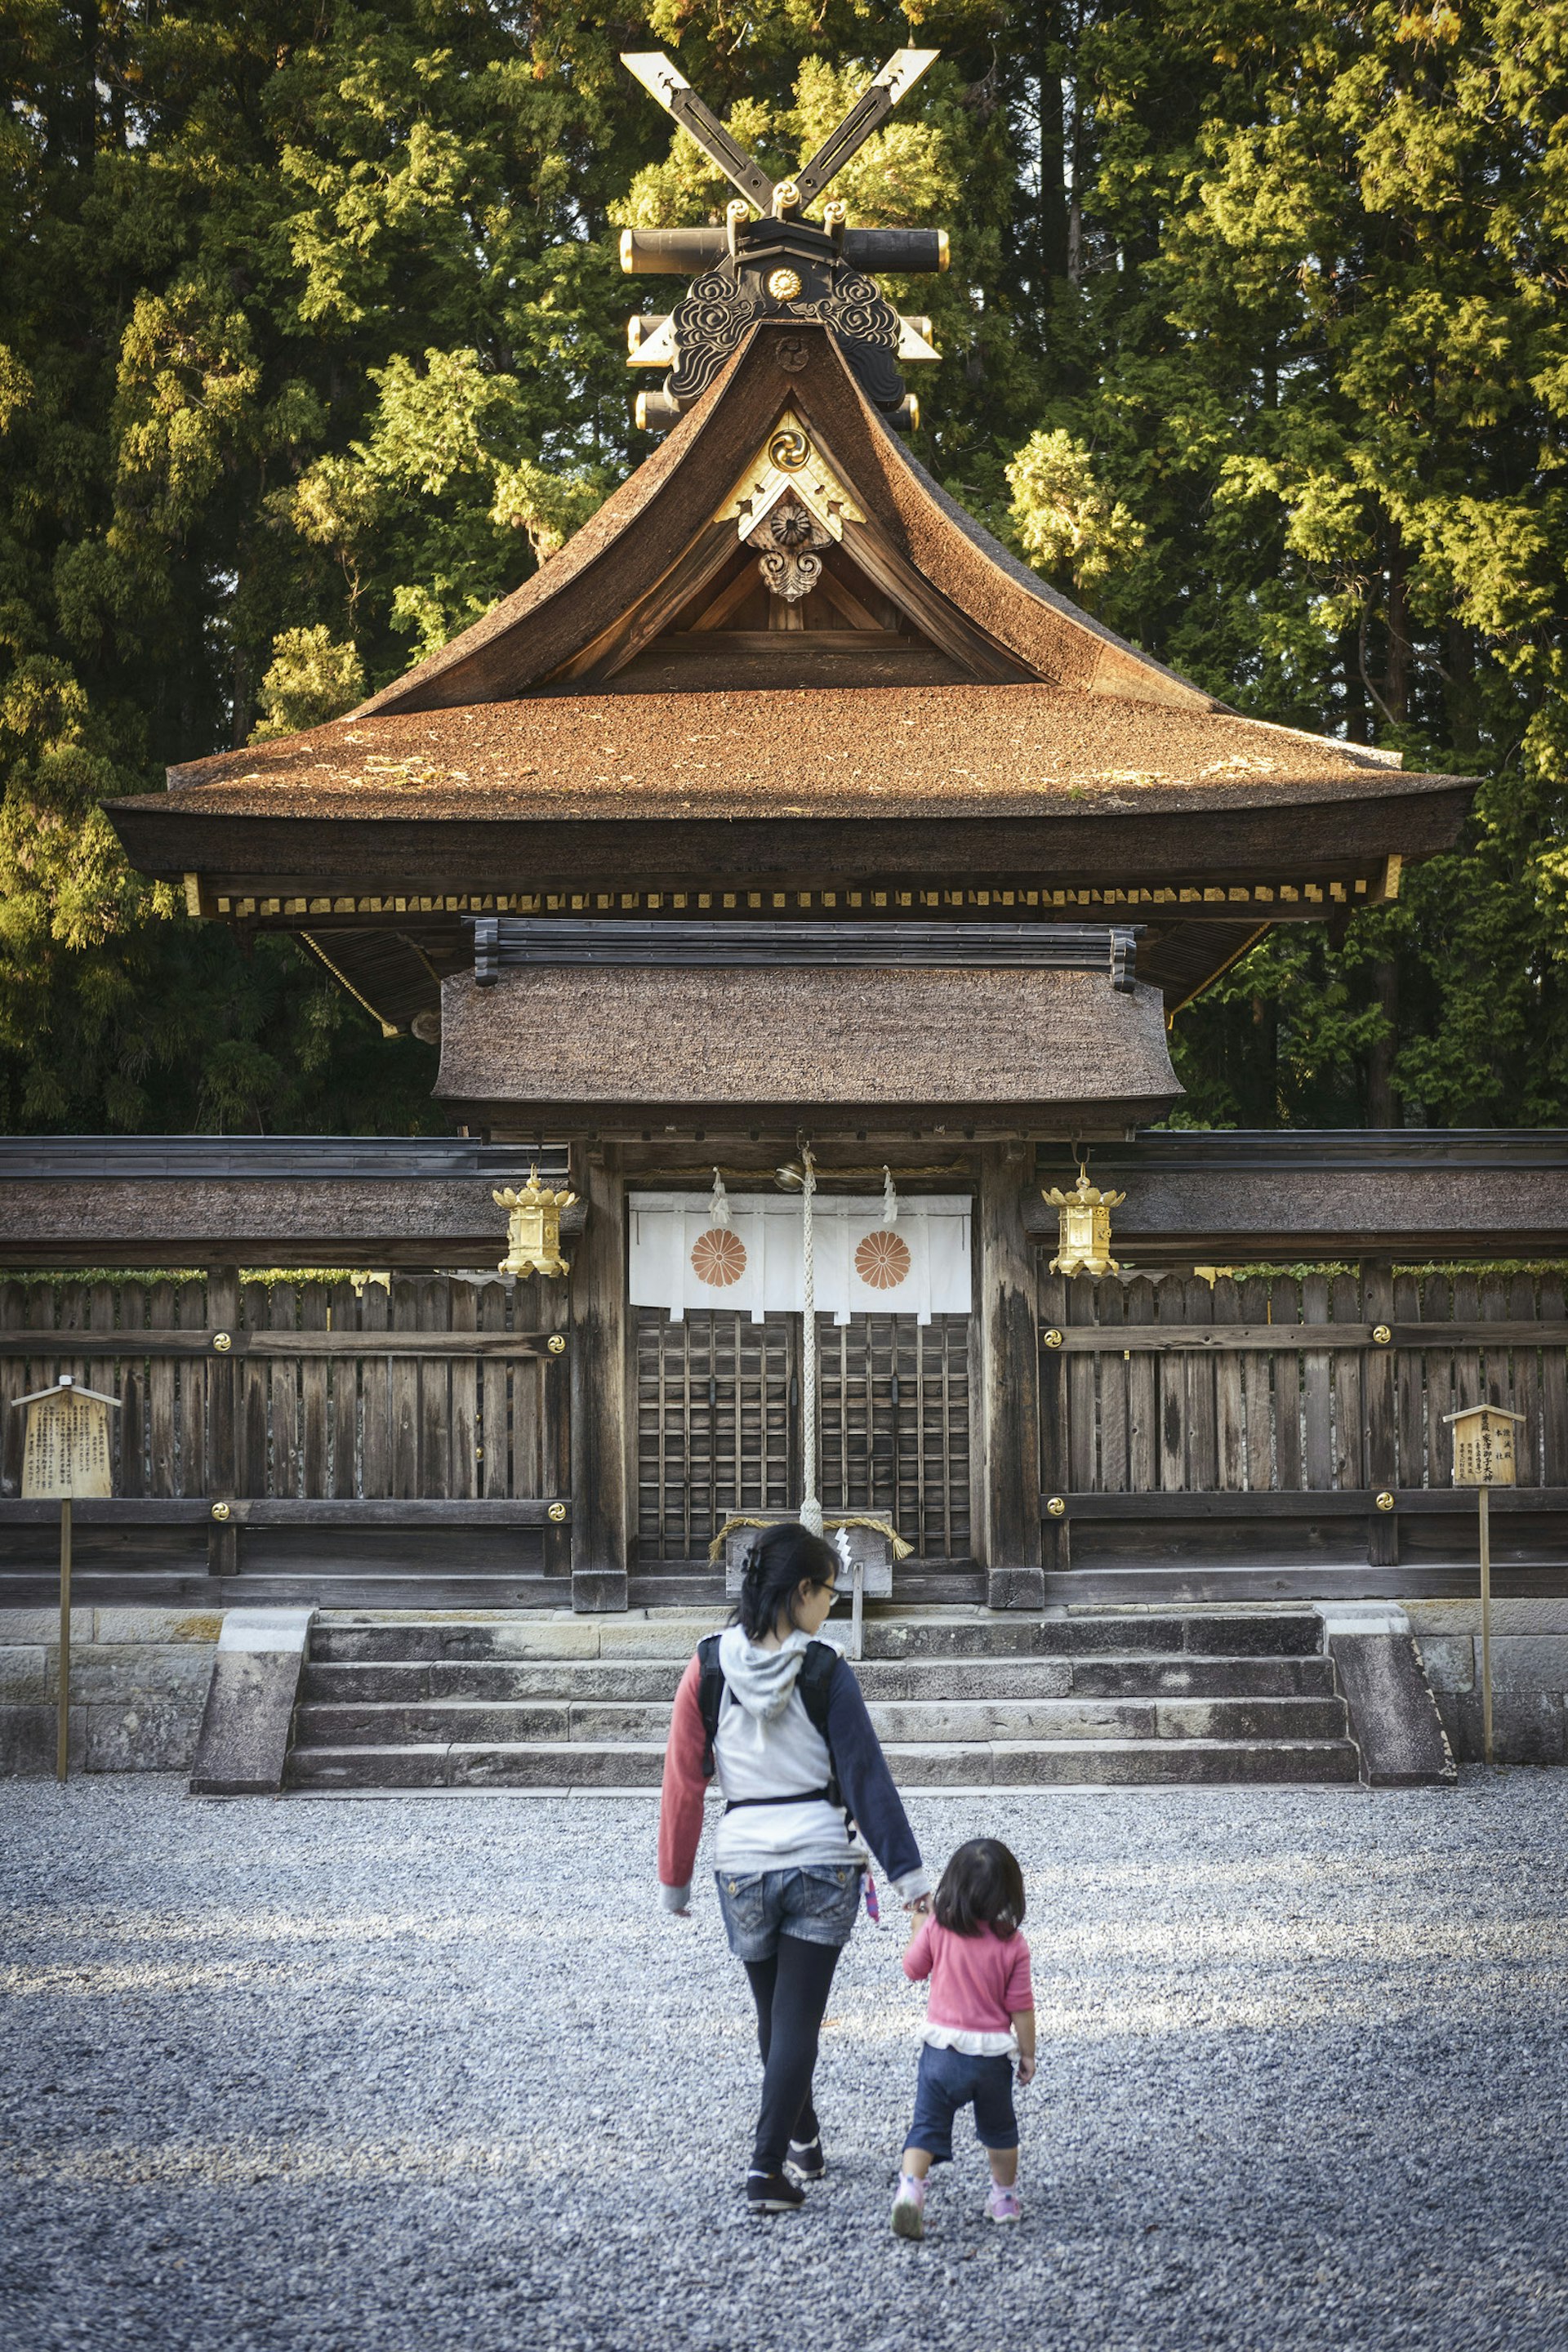 Hongū Taisha is a classic example of Shinto shrine architecture